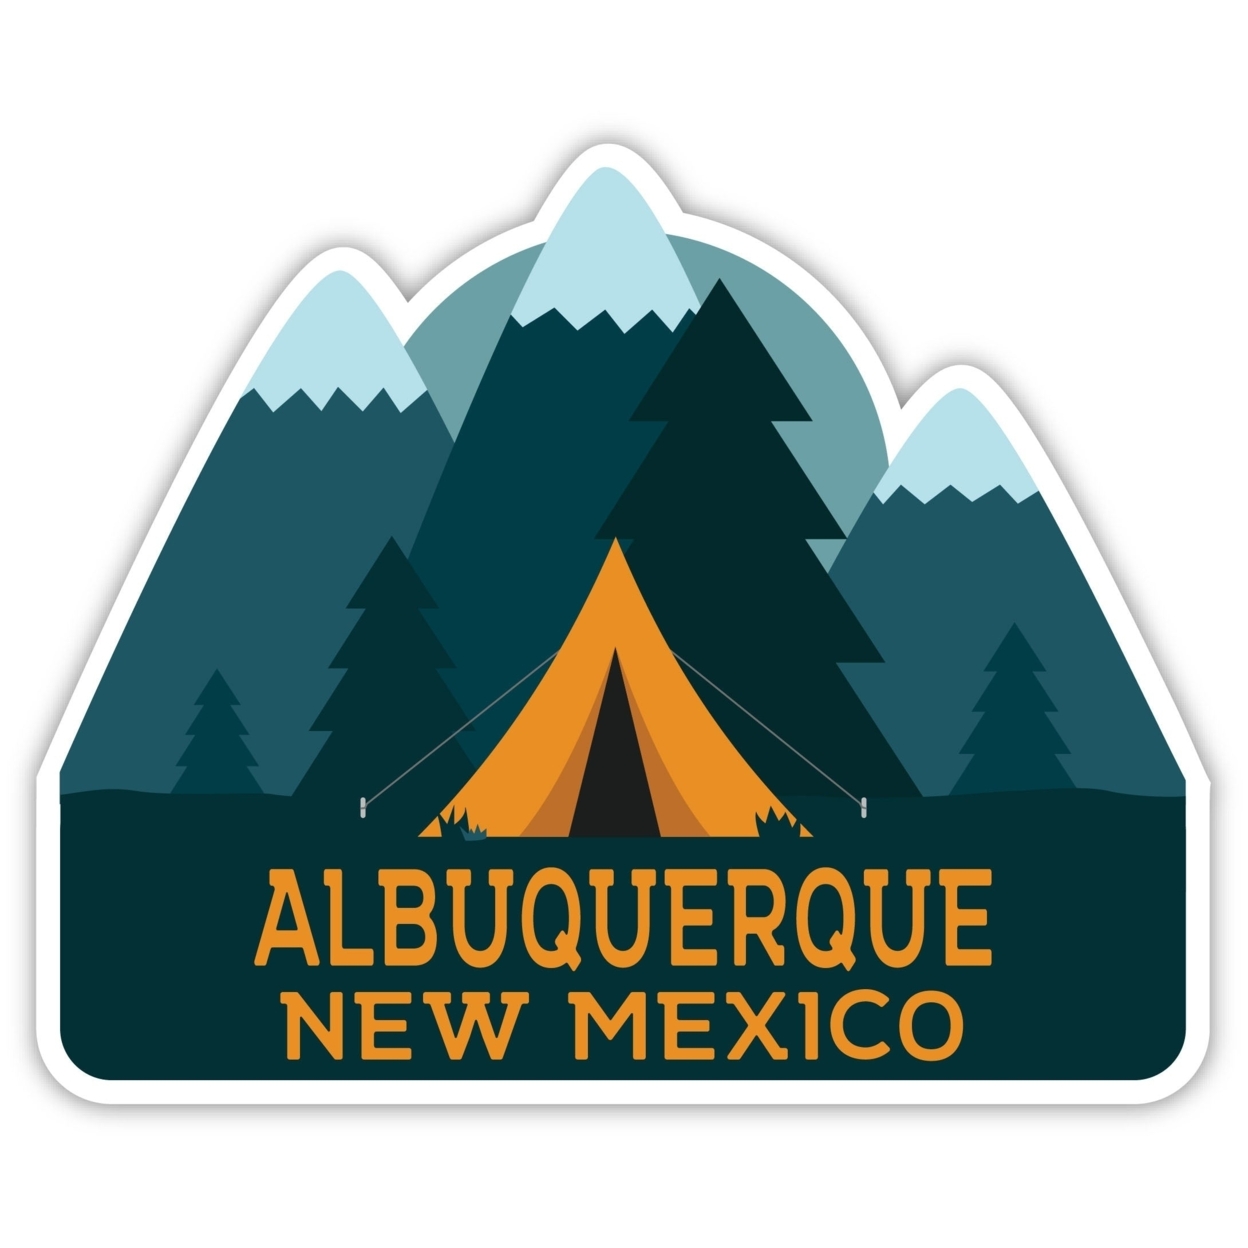 Albuquerque New Mexico Souvenir Decorative Stickers (Choose Theme And Size) - 4-Pack, 4-Inch, Tent